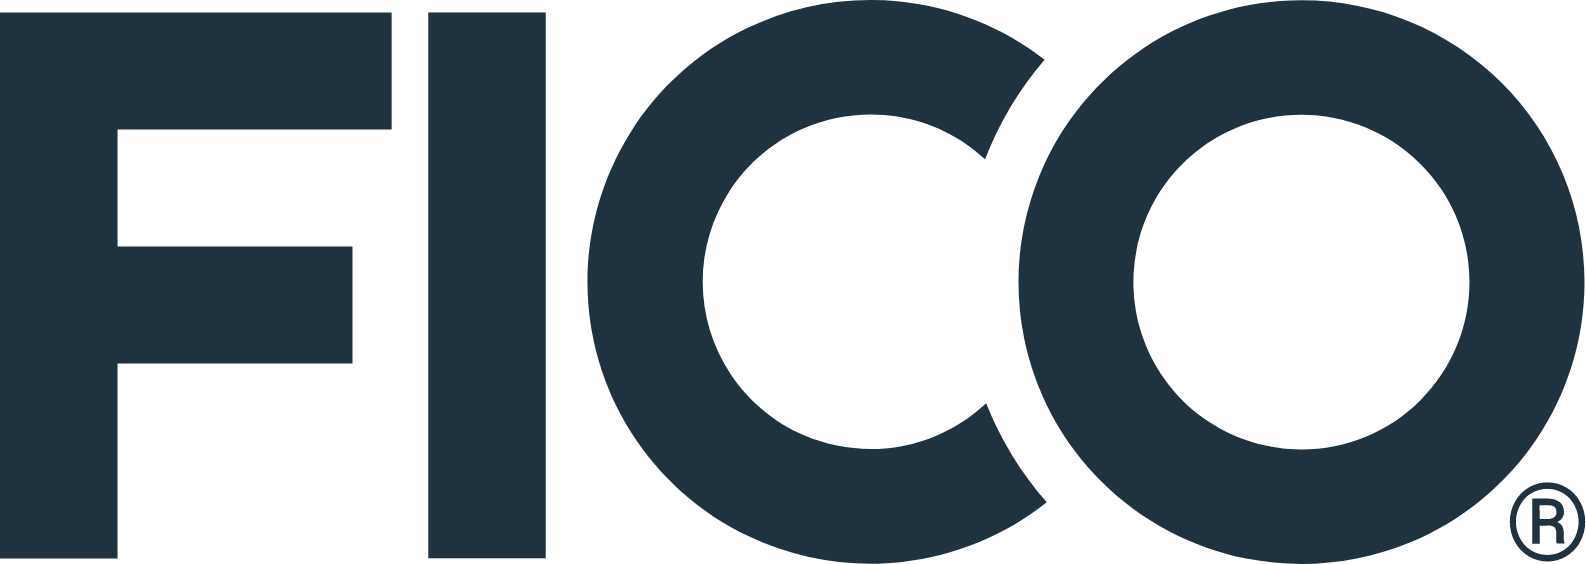 FICO logo large (transparent PNG)